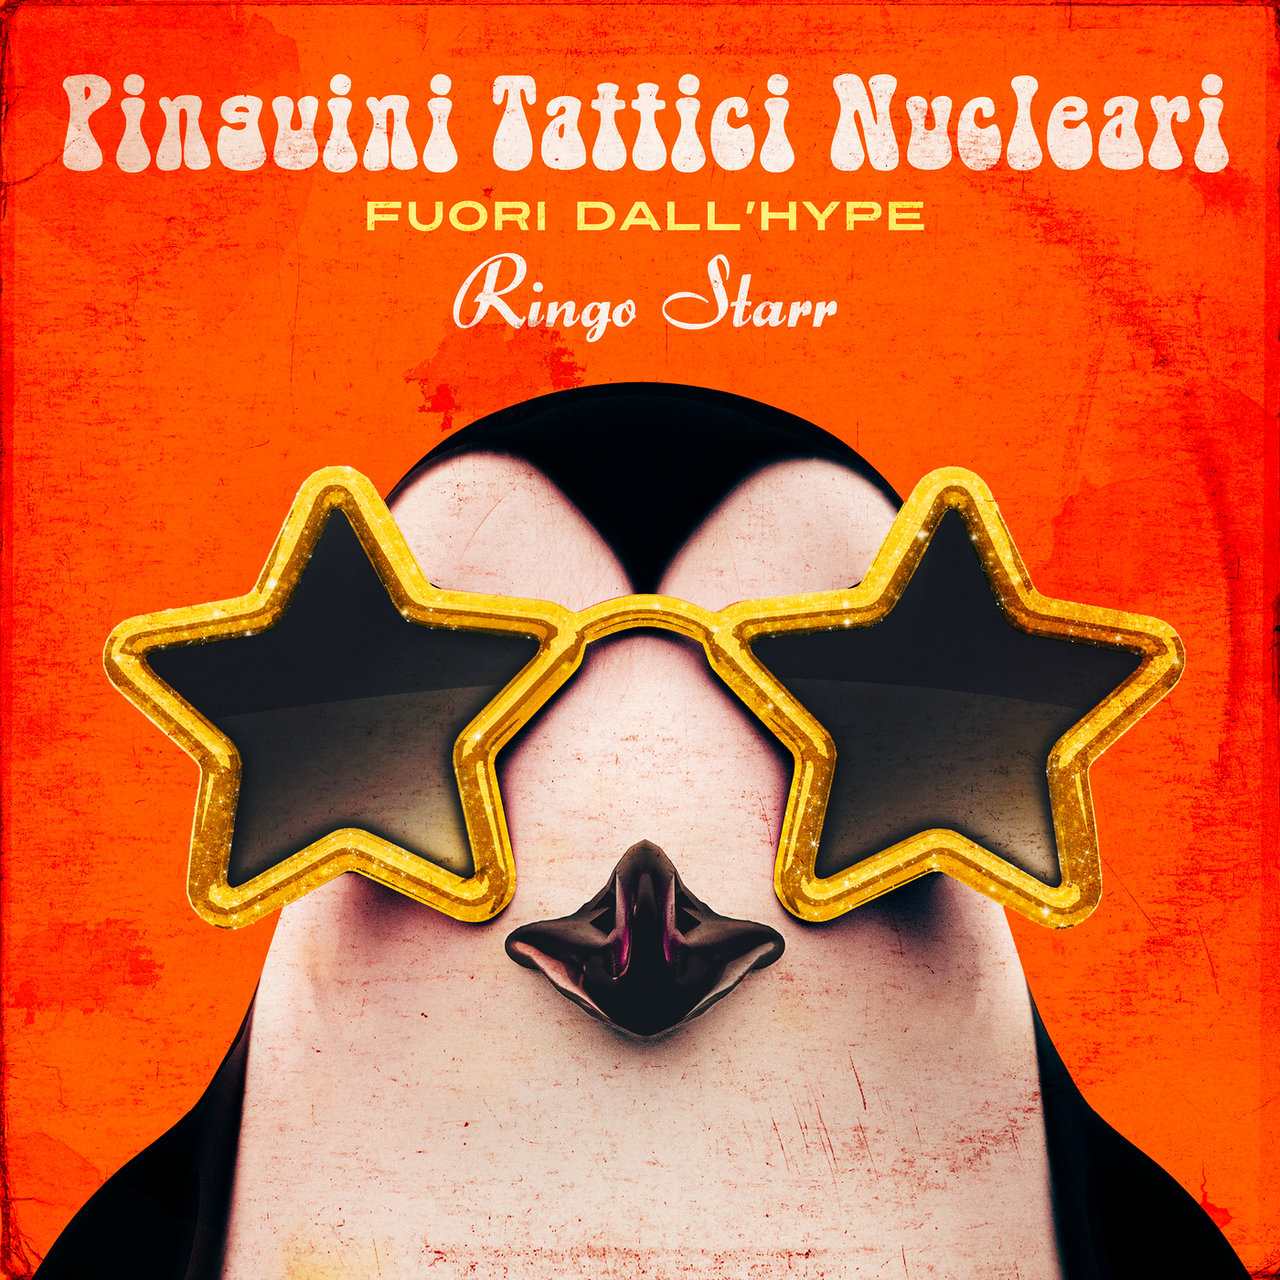 Pinguini Tattici Nucleari — Ringo Starr cover artwork